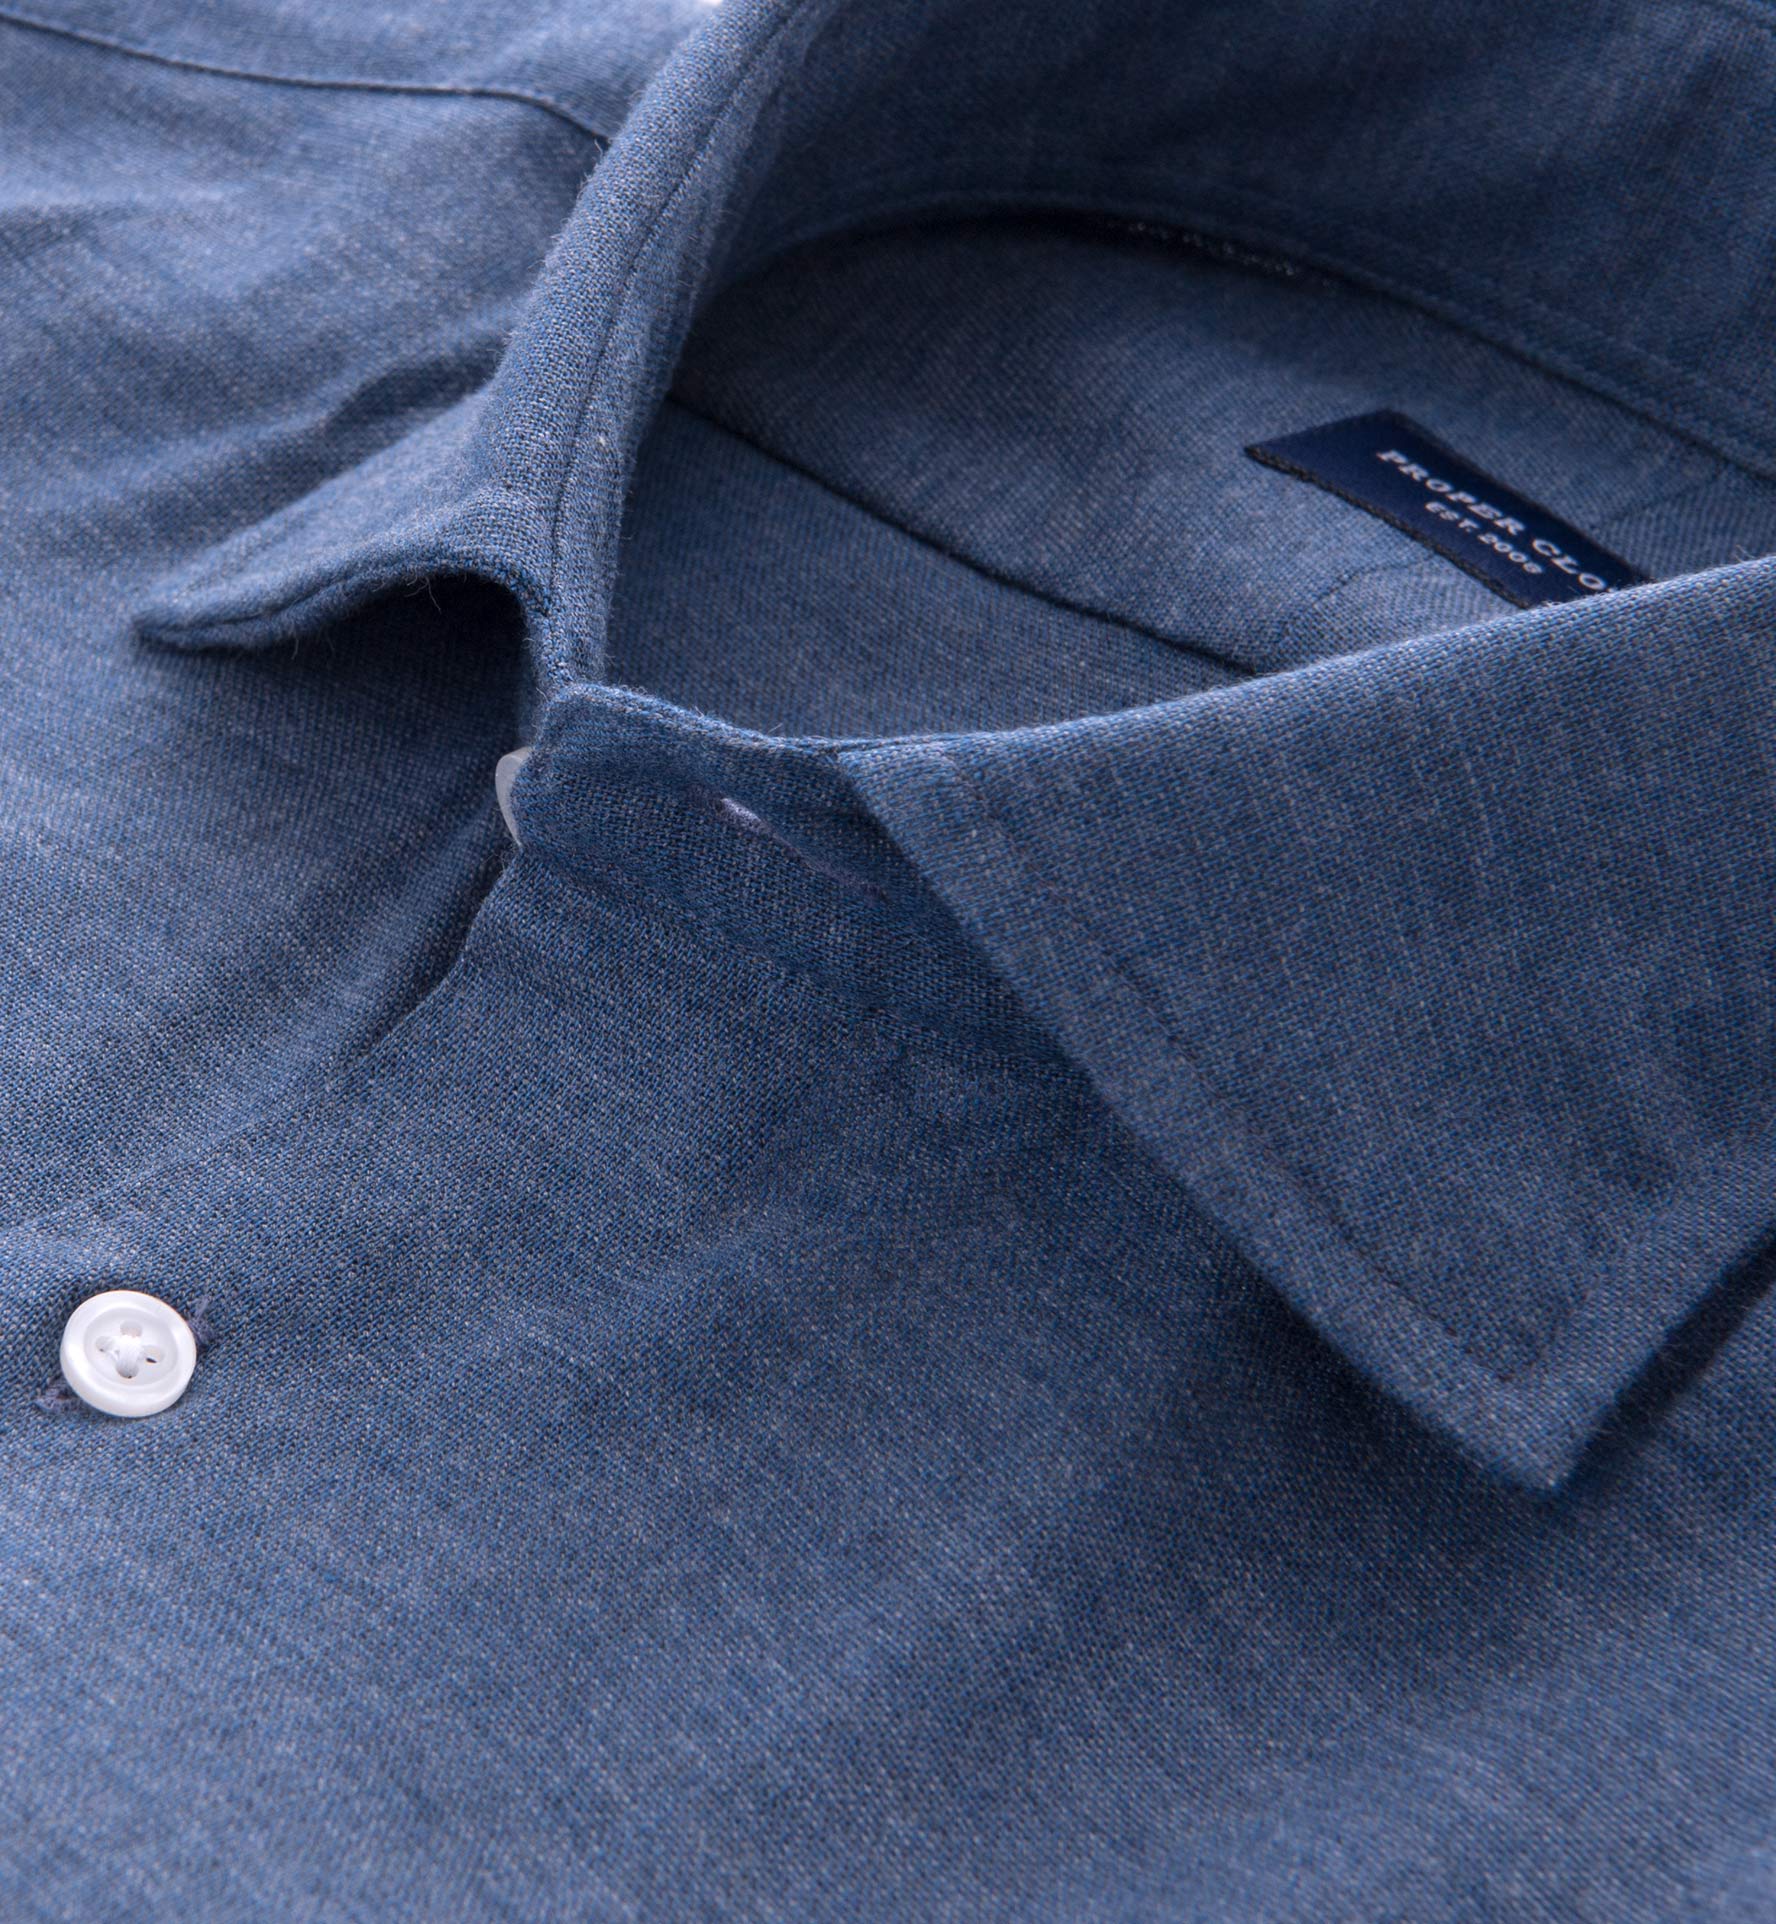 Japanese Slate Blue Chambray Men's Dress Shirt by Proper Cloth